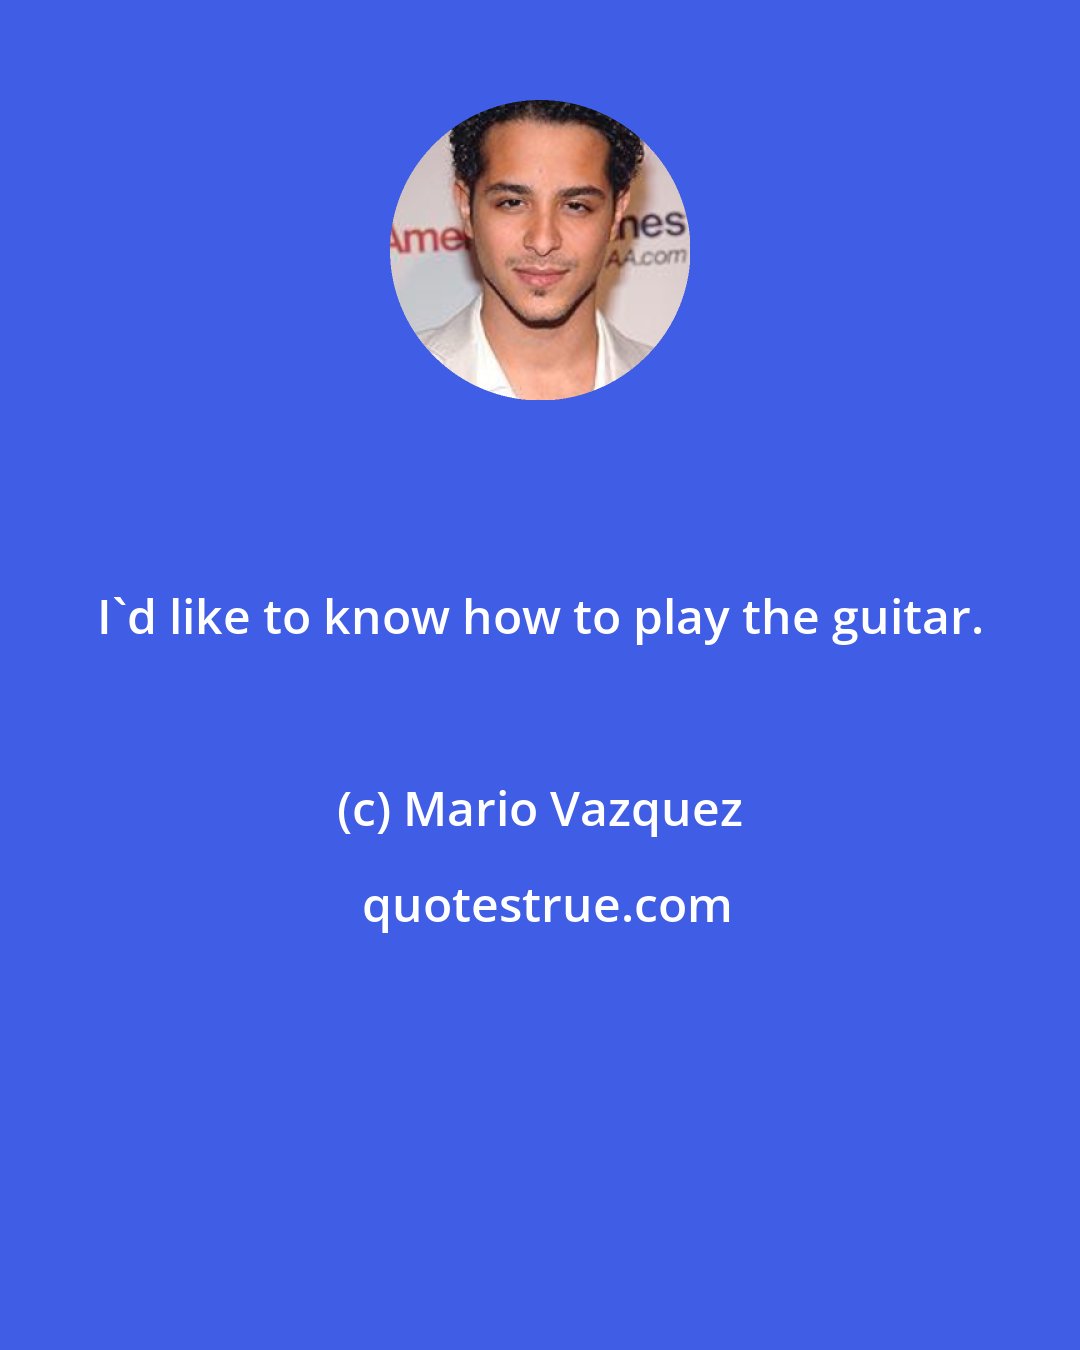 Mario Vazquez: I'd like to know how to play the guitar.